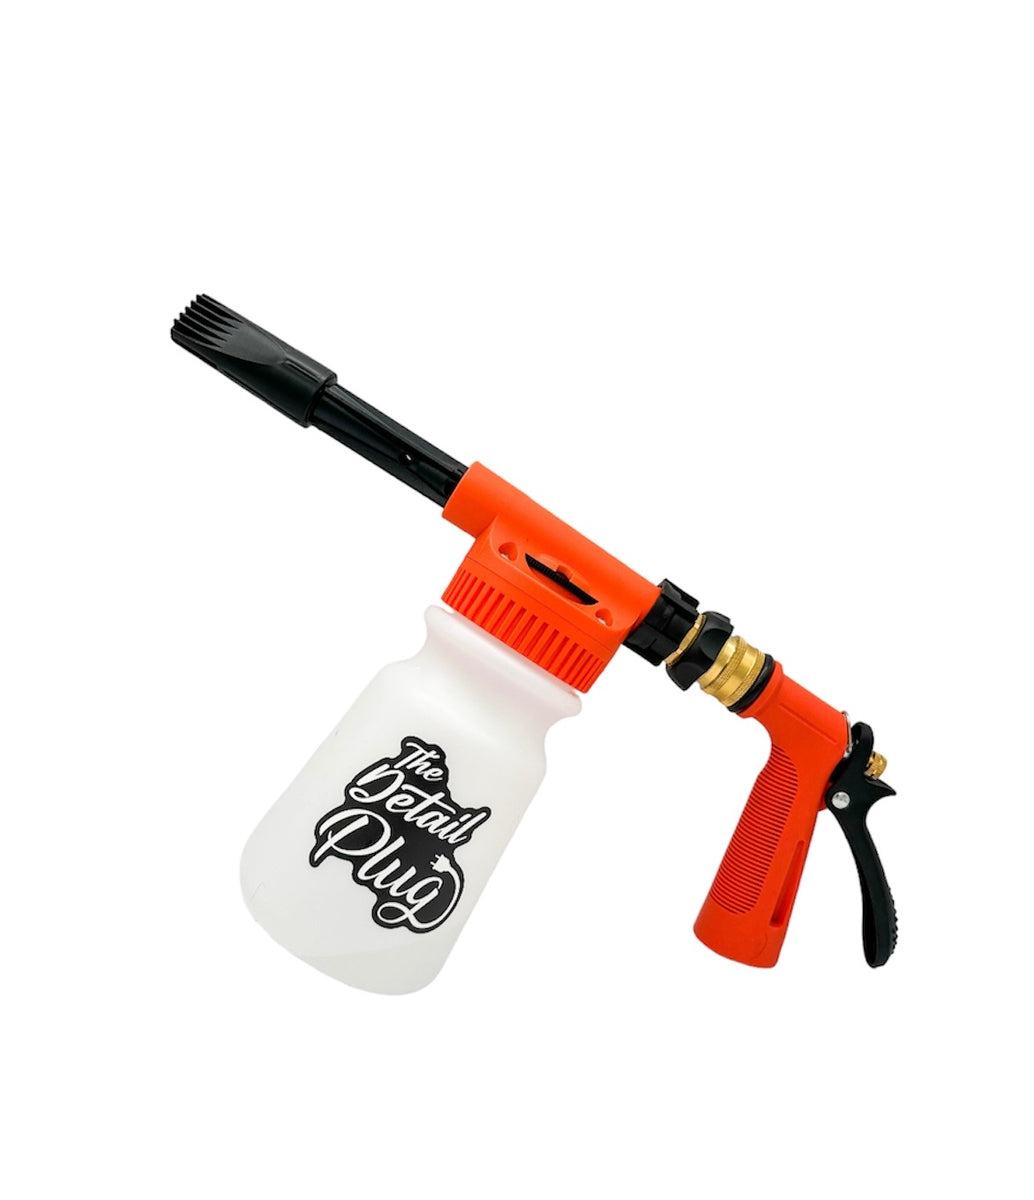 Lanzador de Espuma , Garden Hose Foam Blaster - The Detail Plug 